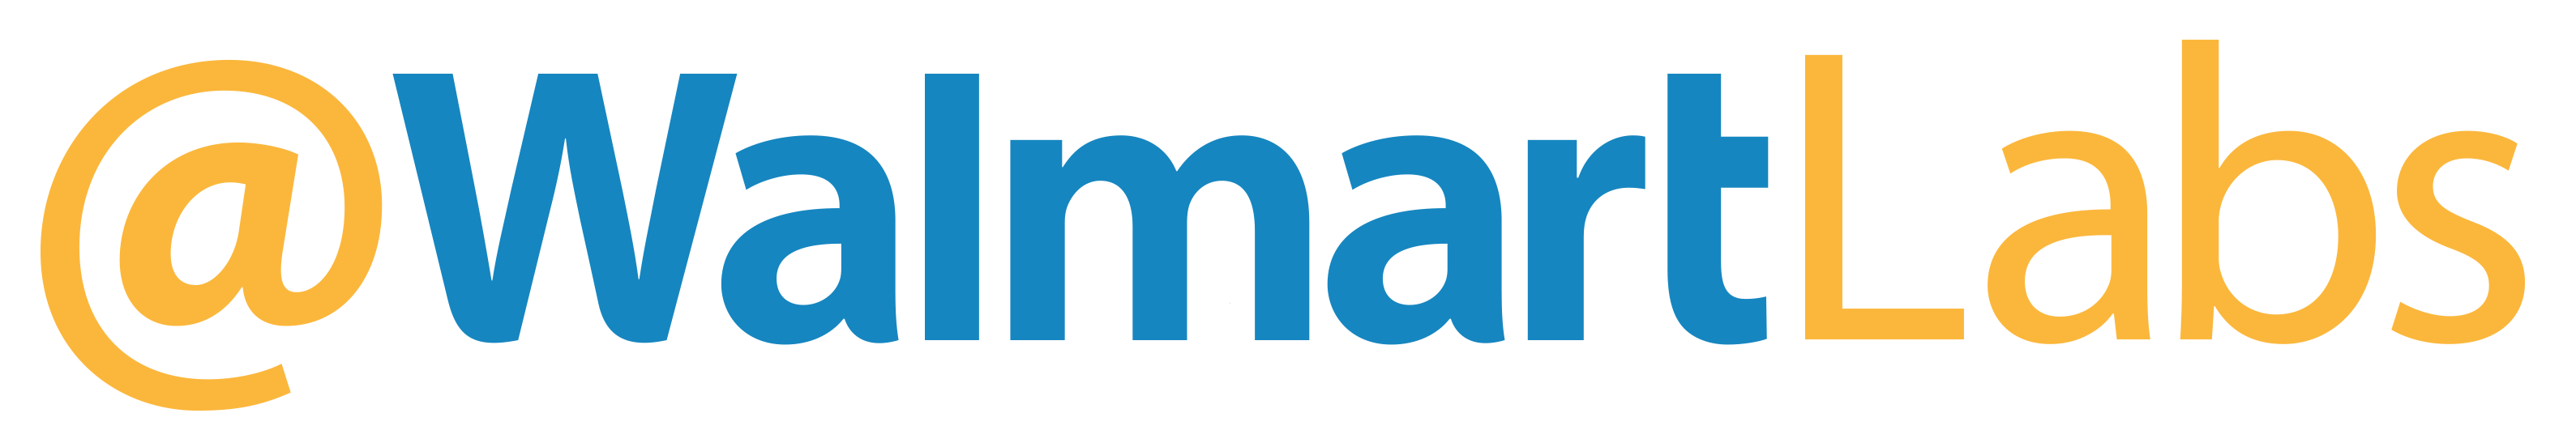 walmartlabs-logo.png